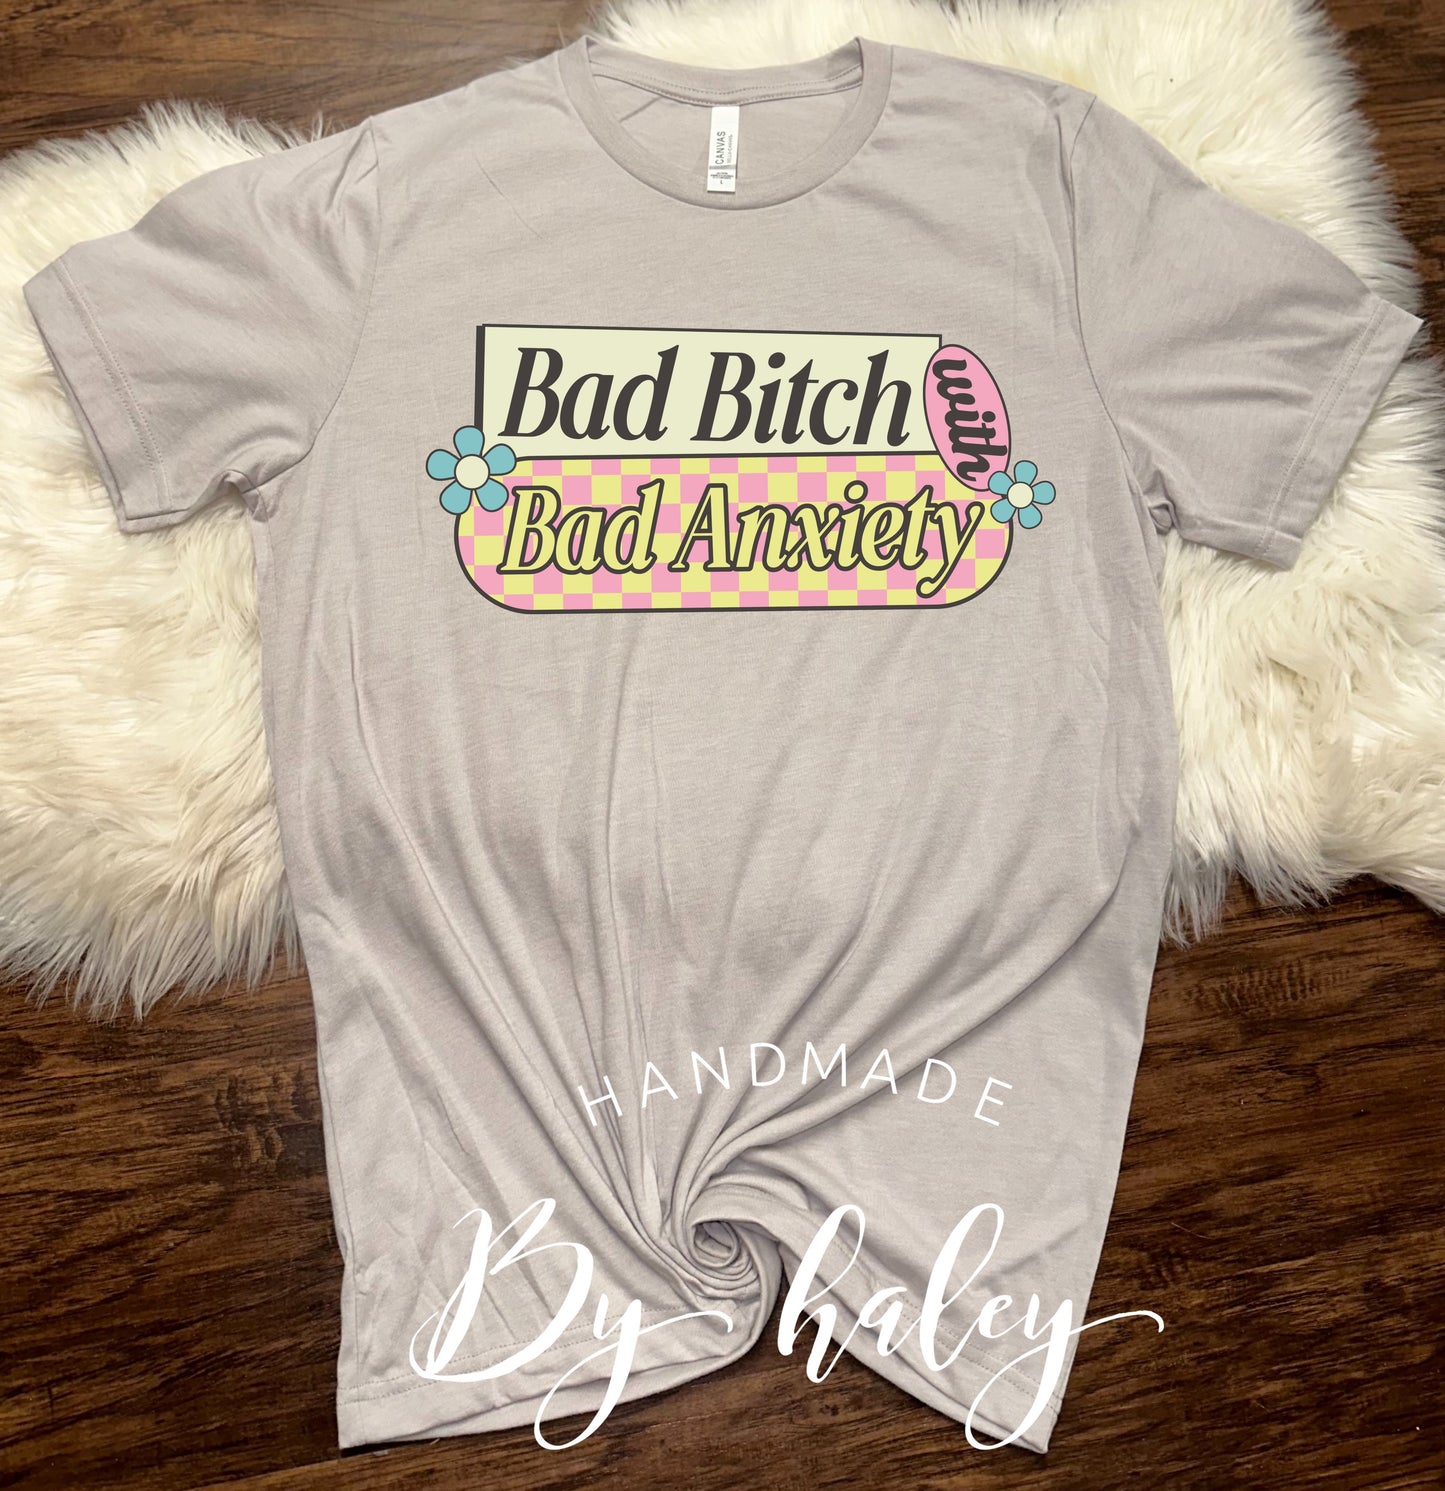 Bad Anxiety T-Shirt